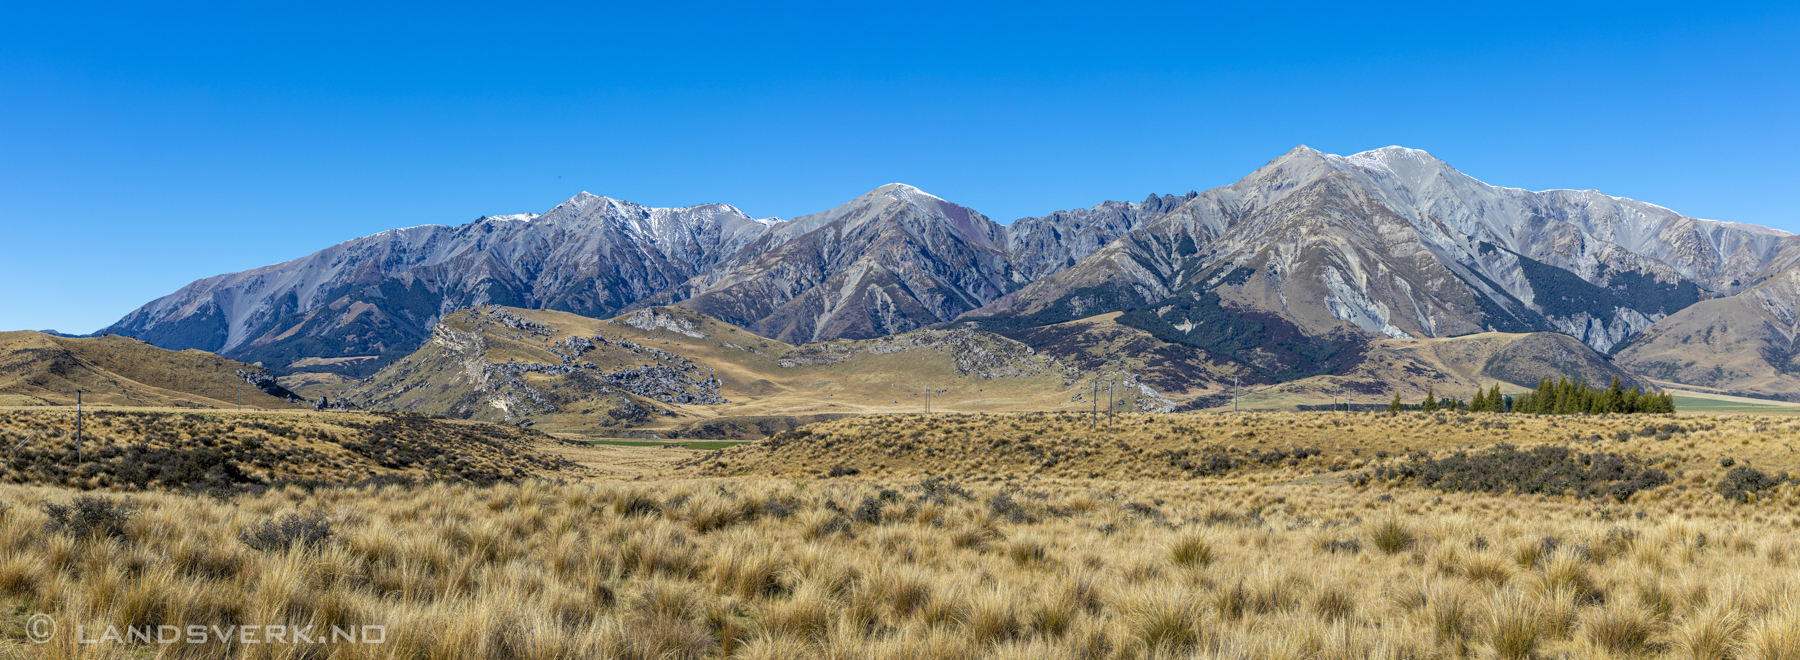 Castle Hill Peak, New Zealand. 

(Canon EOS 5D Mark IV / Canon EF 24-70mm f/2.8 L II USM)